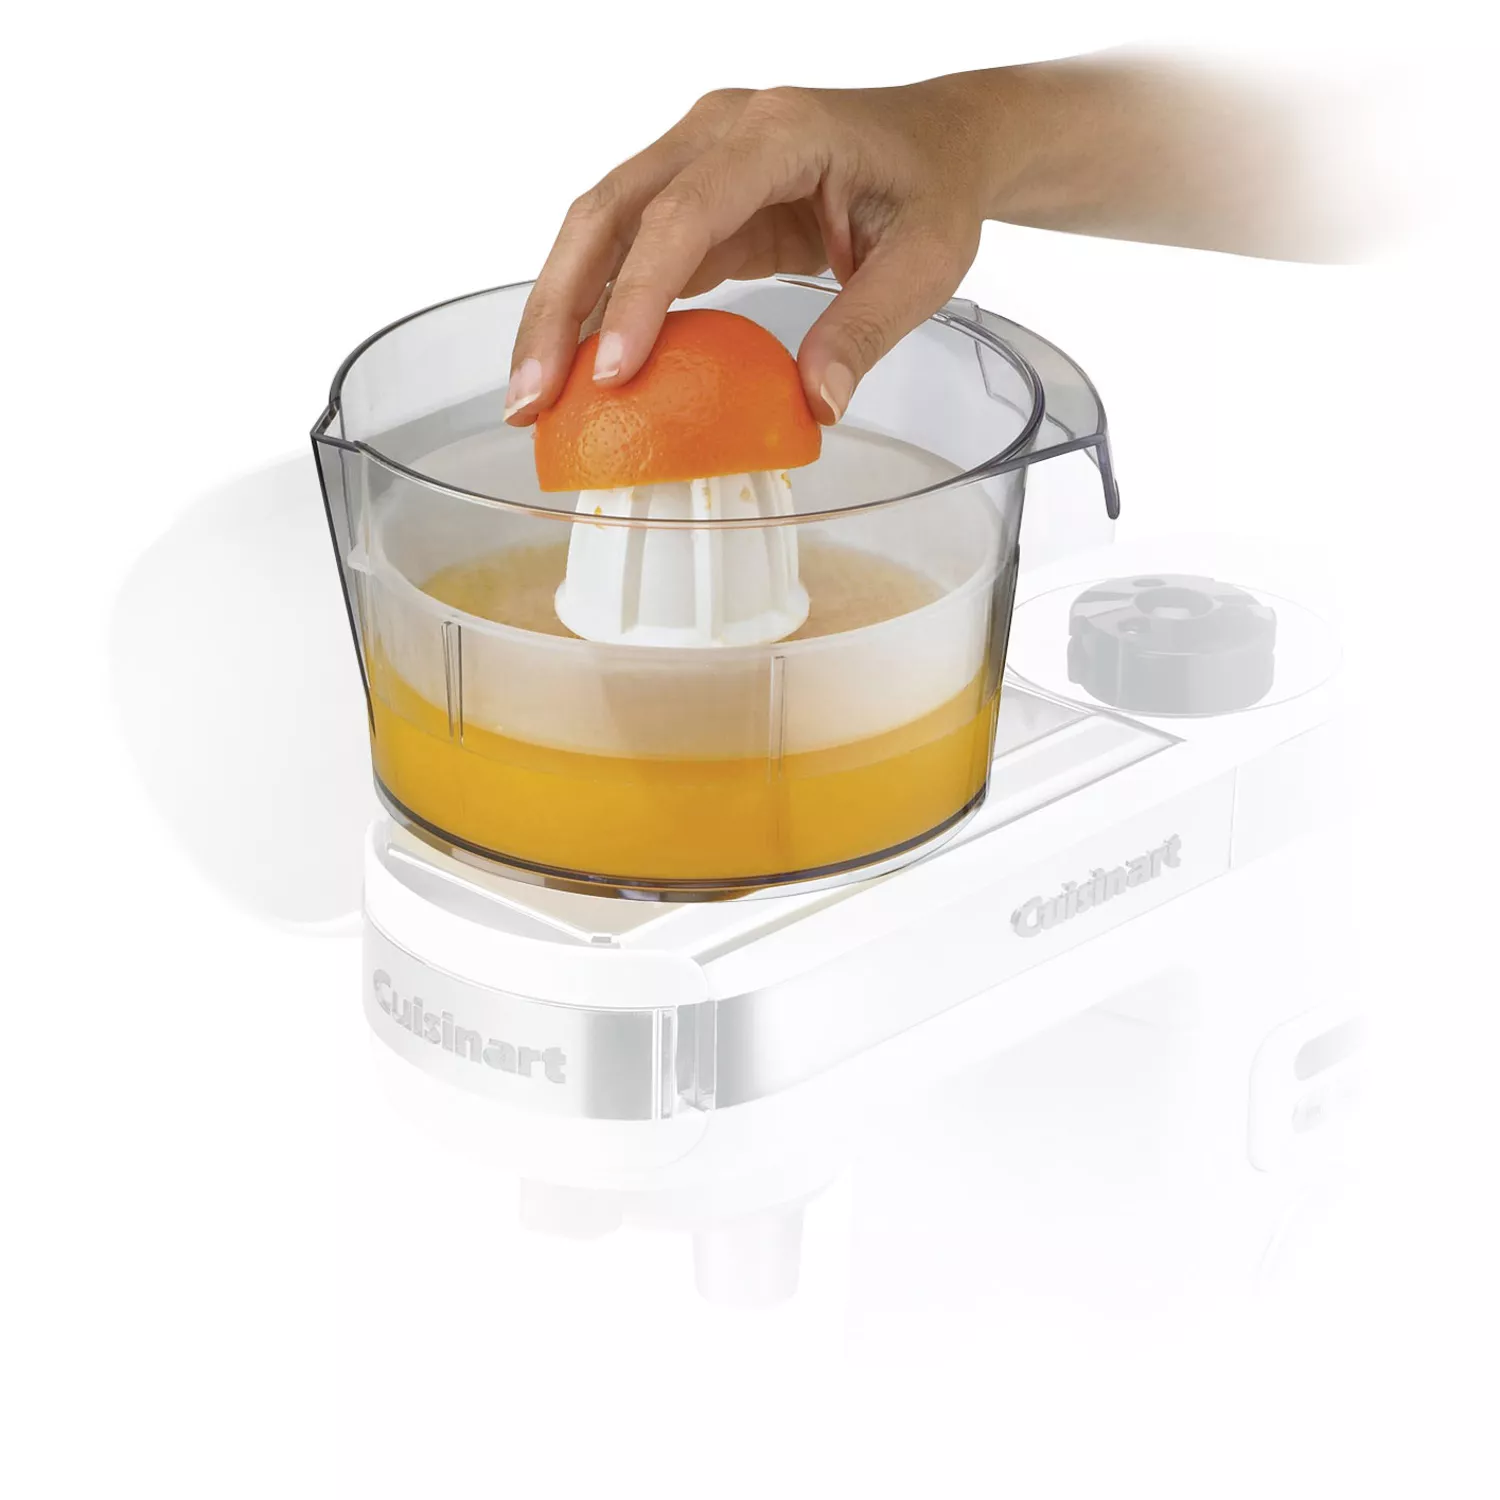 Cuisinart Stand Mixer Citrus Juicer Attachment